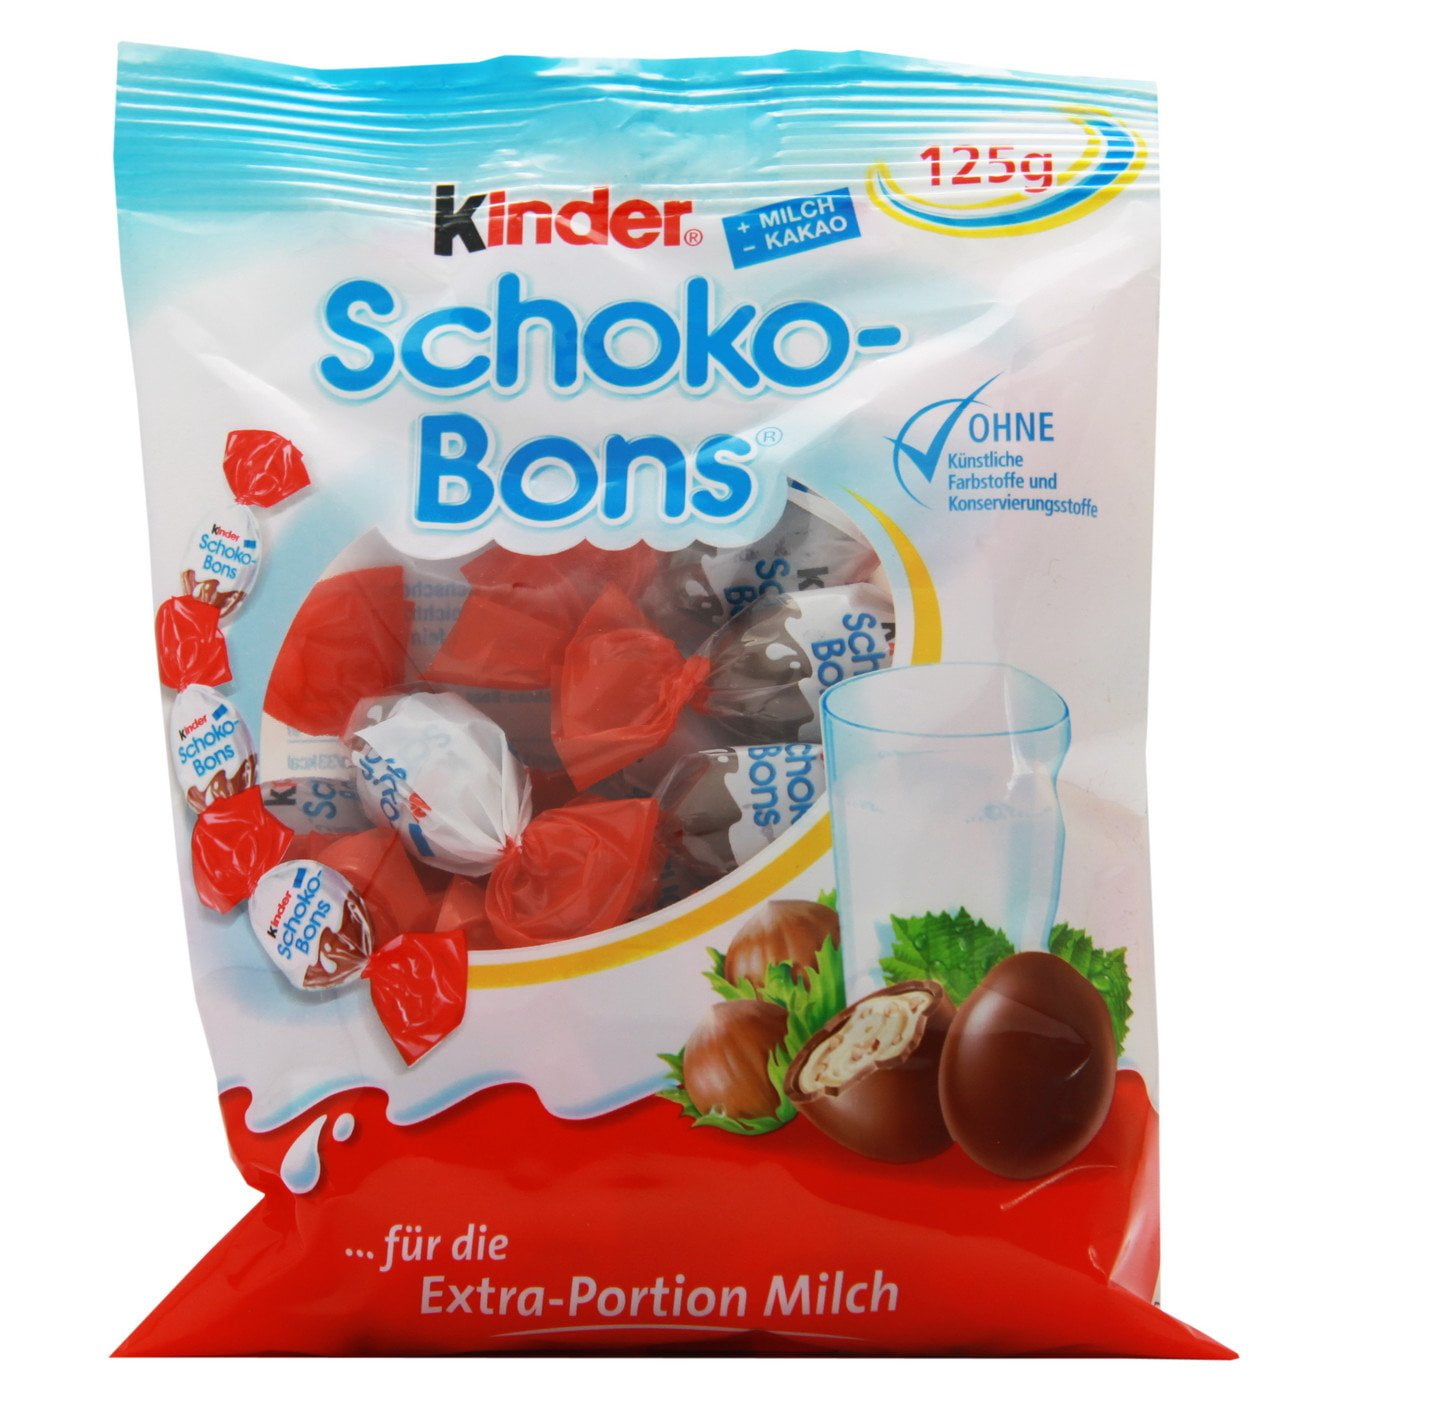 Kinder Schoko-Bons (6.7 oz) - Dona Maria Gourmet